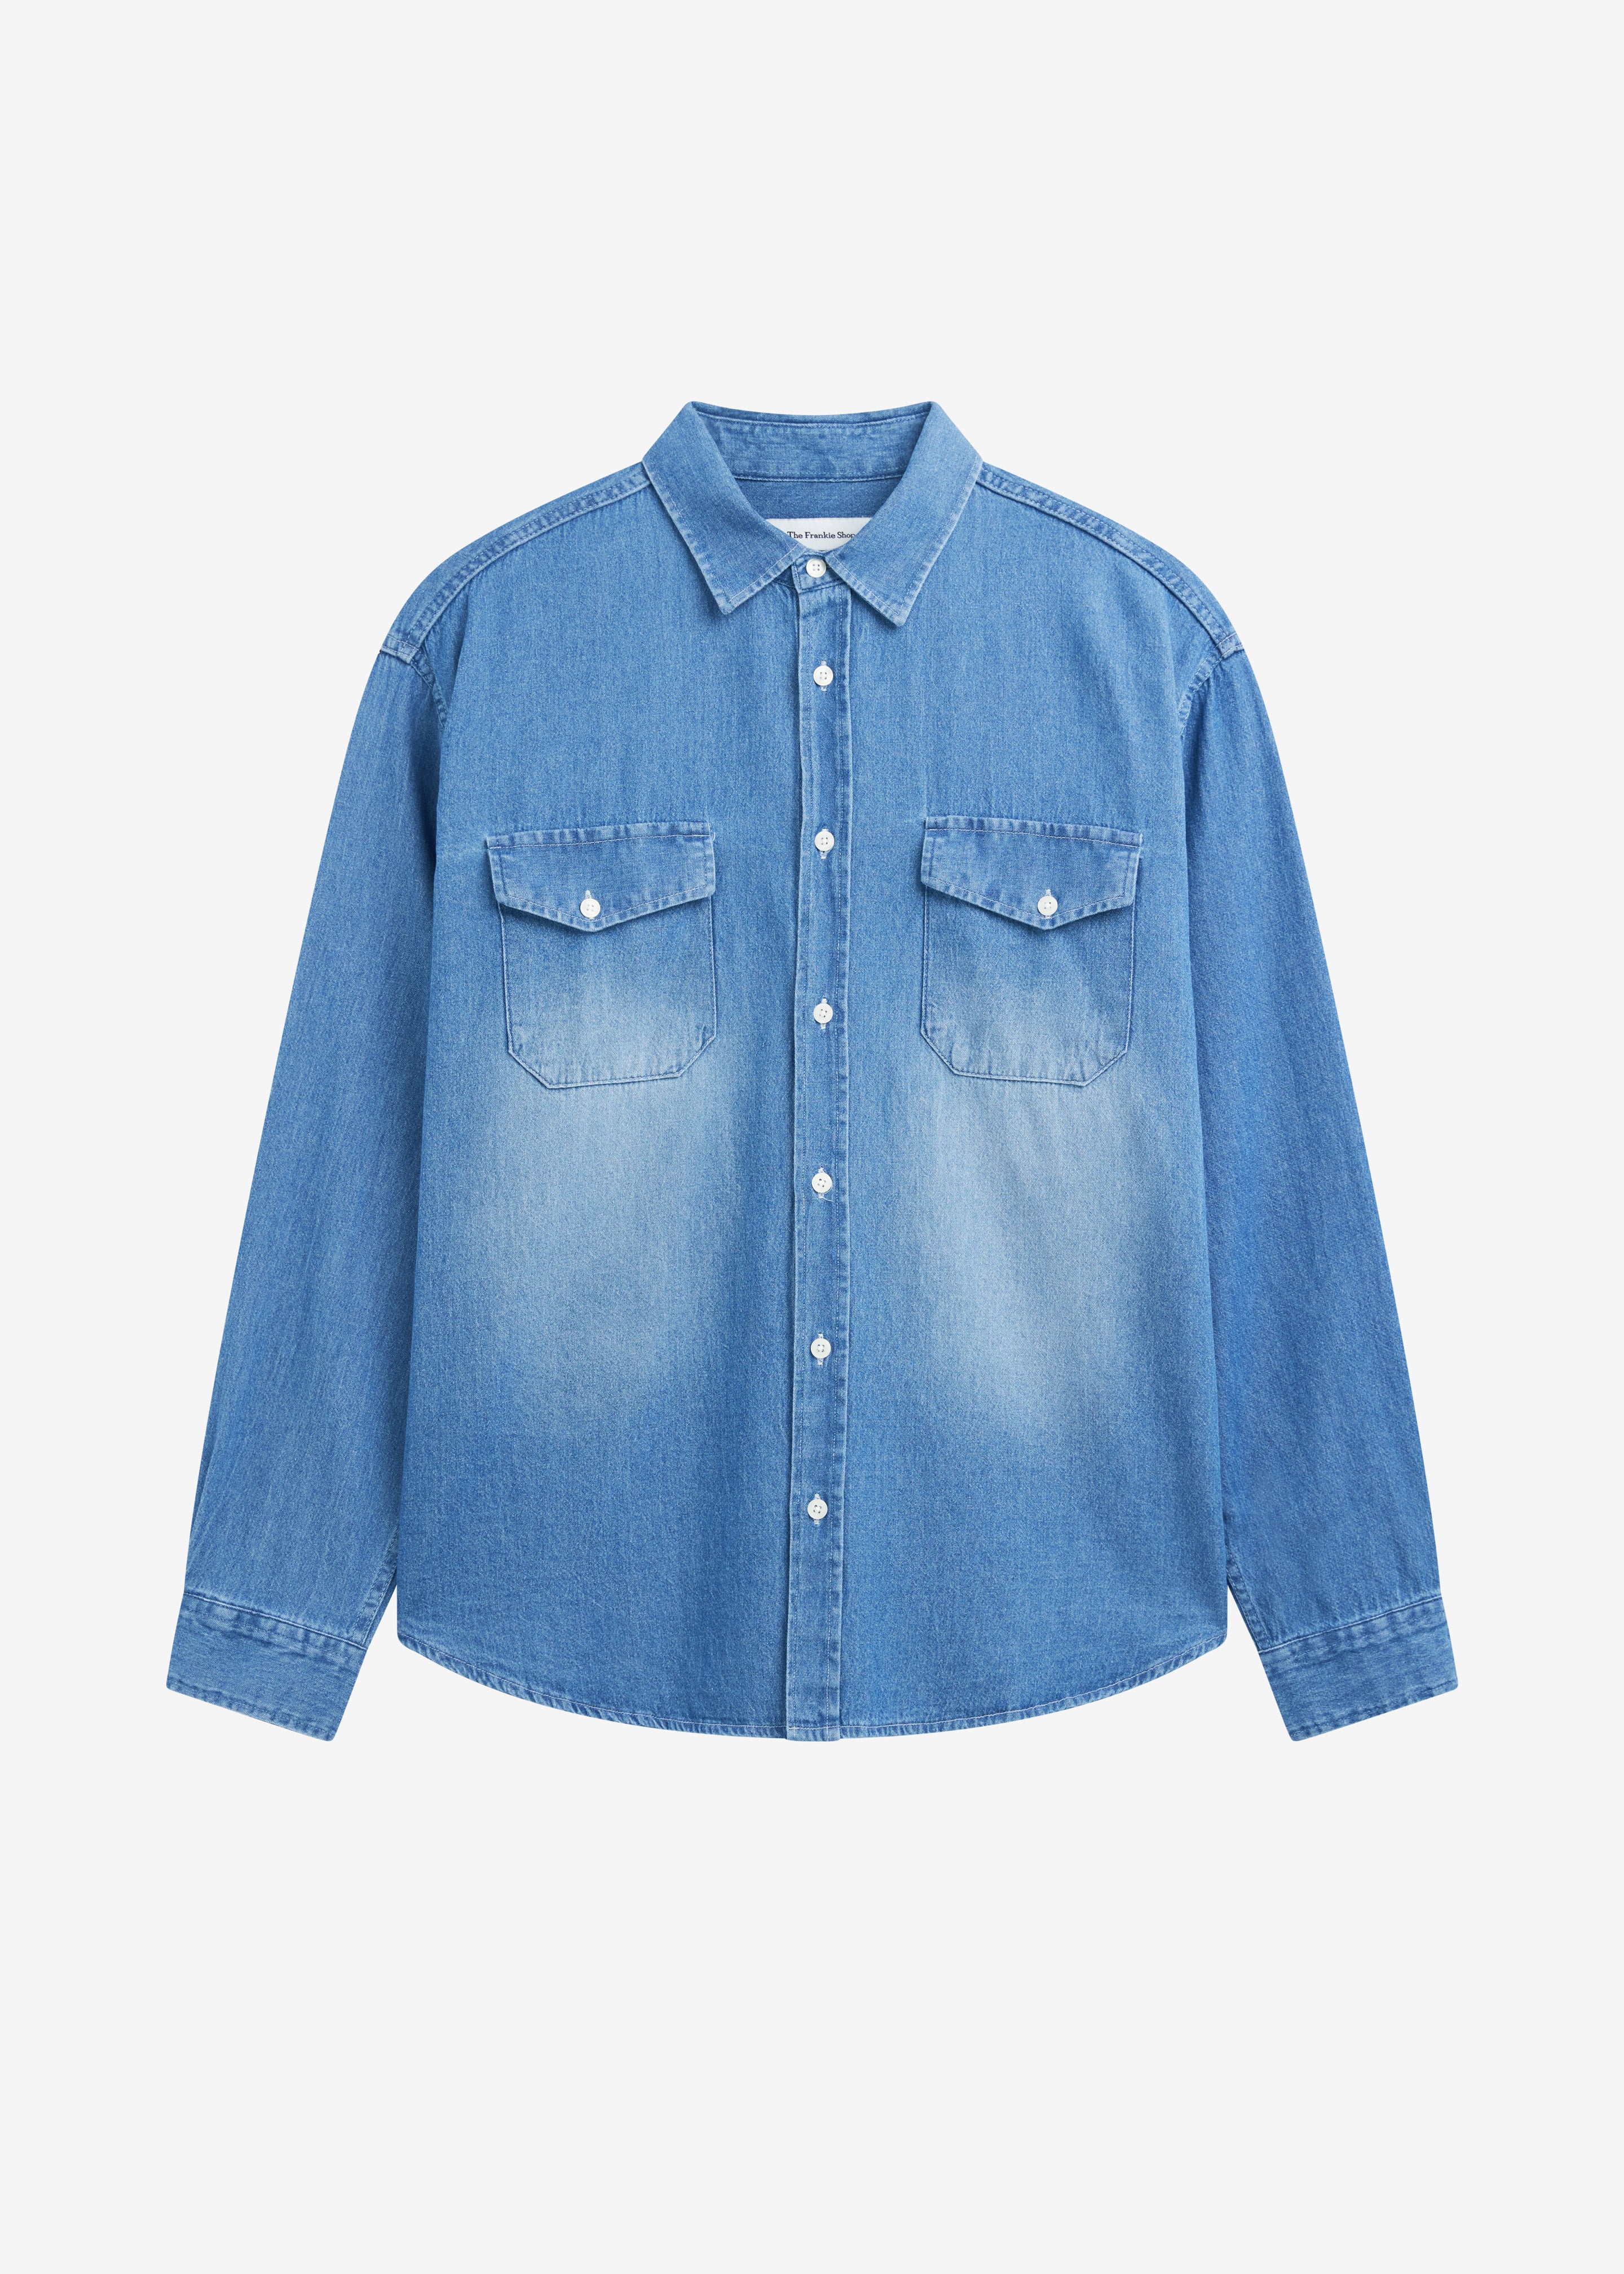 Rhett Denim Button Up Shirt - Blue Wash - 10